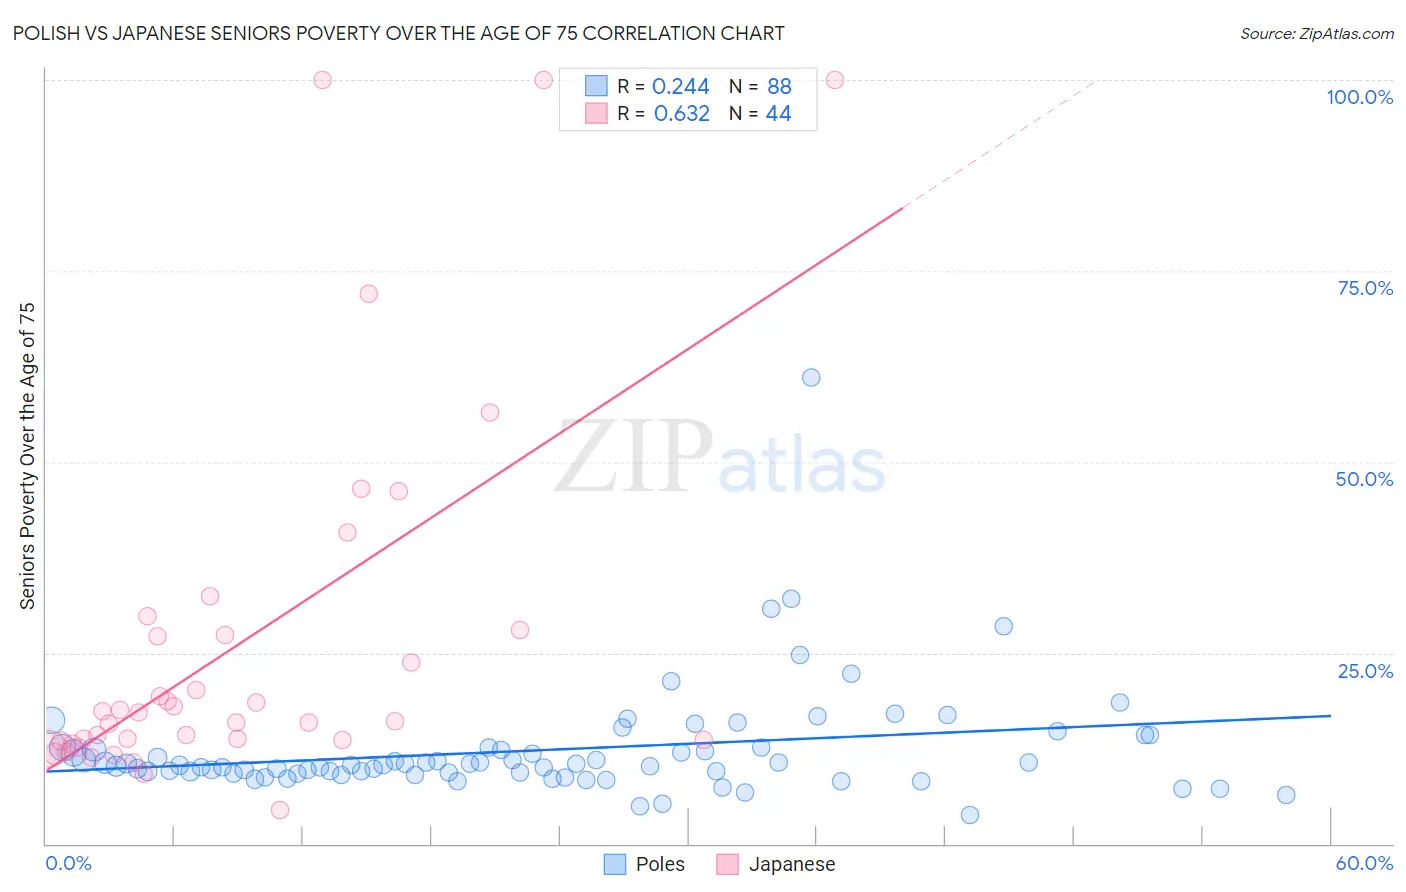 Polish vs Japanese Seniors Poverty Over the Age of 75